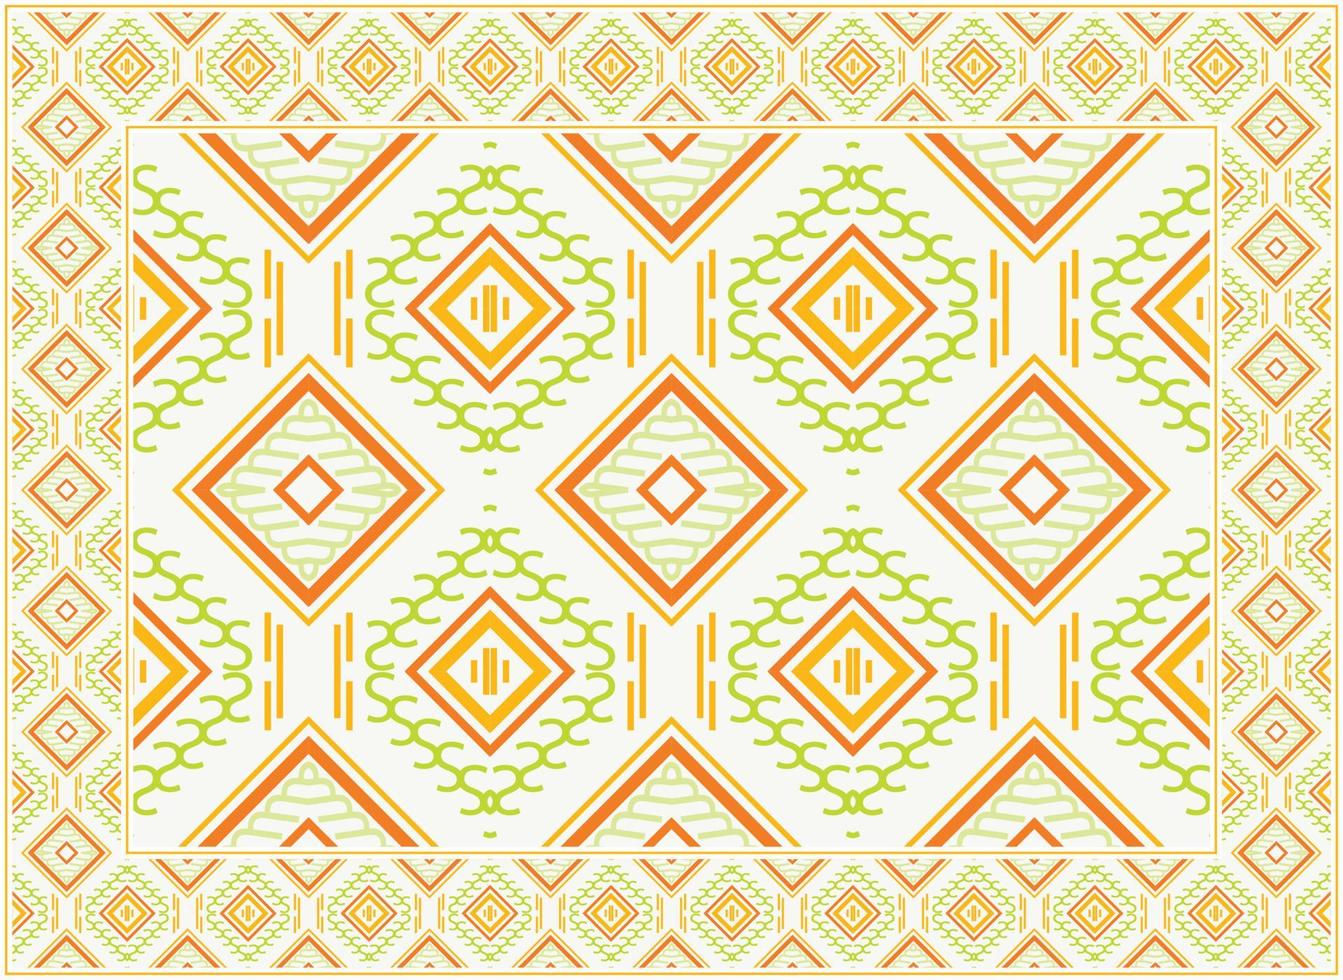 alfombra persa alfombra moderno vivo habitación, motivo étnico sin costura modelo moderno persa alfombra, africano étnico azteca estilo diseño para impresión tela alfombras, toallas, pañuelos, bufandas alfombra, vector